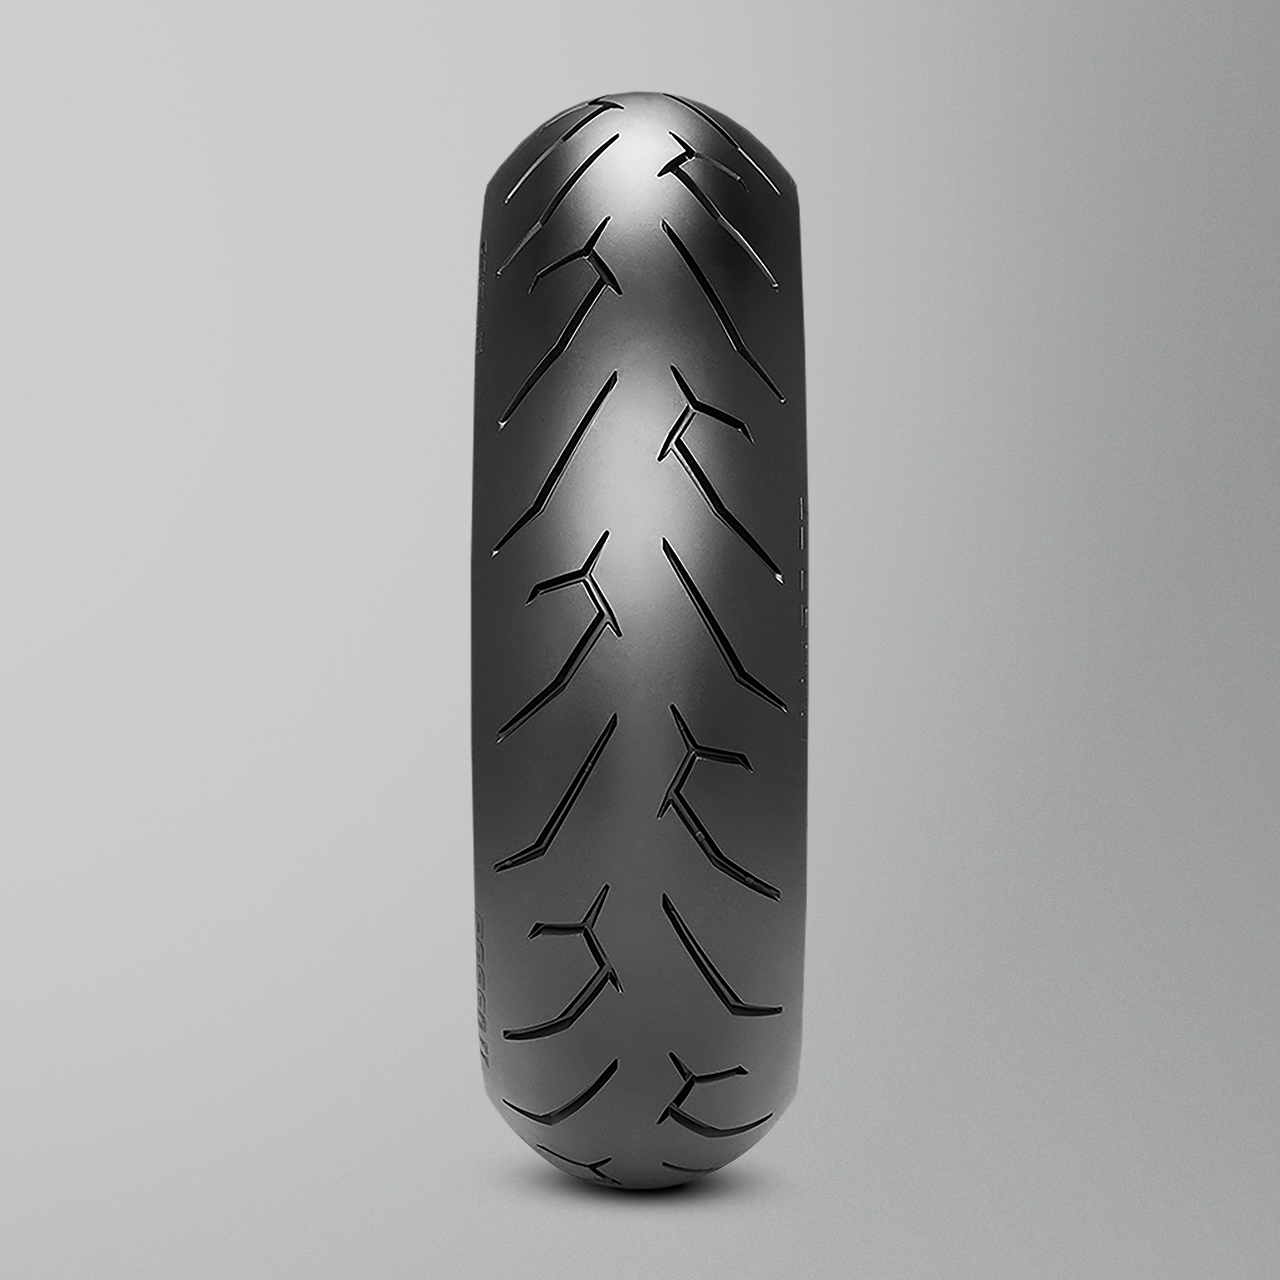 Pirelli Diablo Rosso II MC Tyre 120/70 ZR 17 M/C (58W) TL (D) - Now 22%  Savings